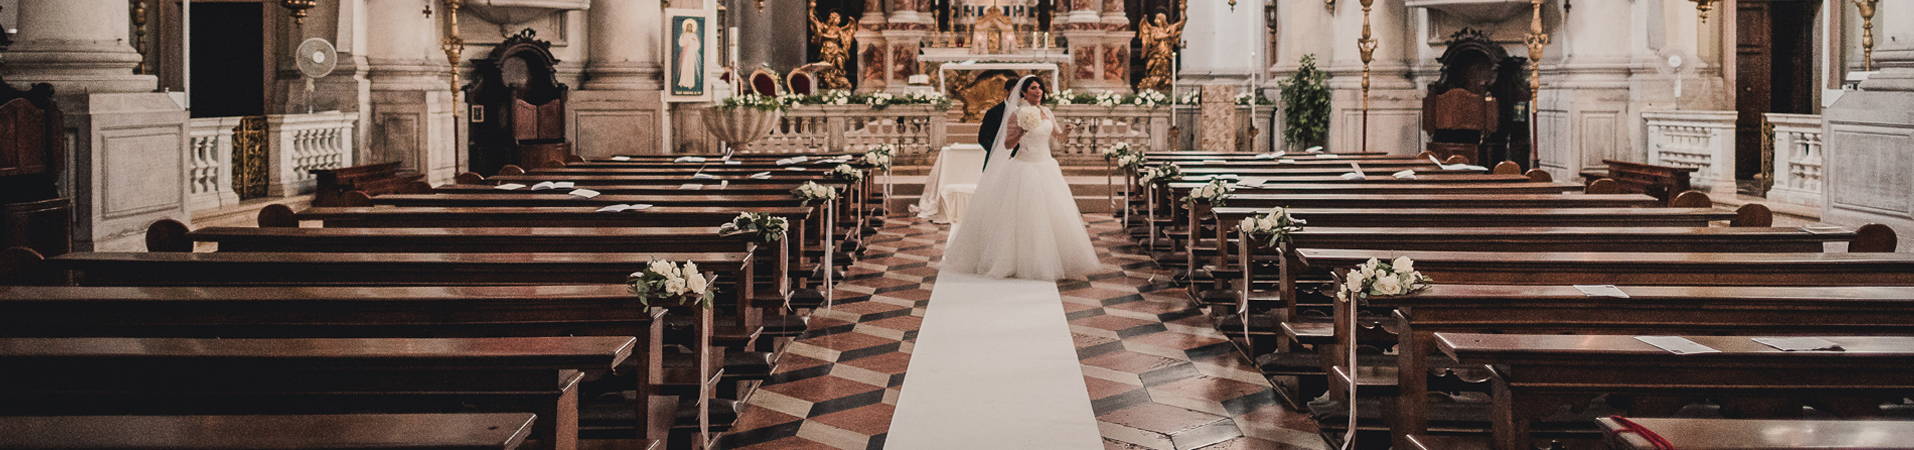 chiesa matrimonio venezia